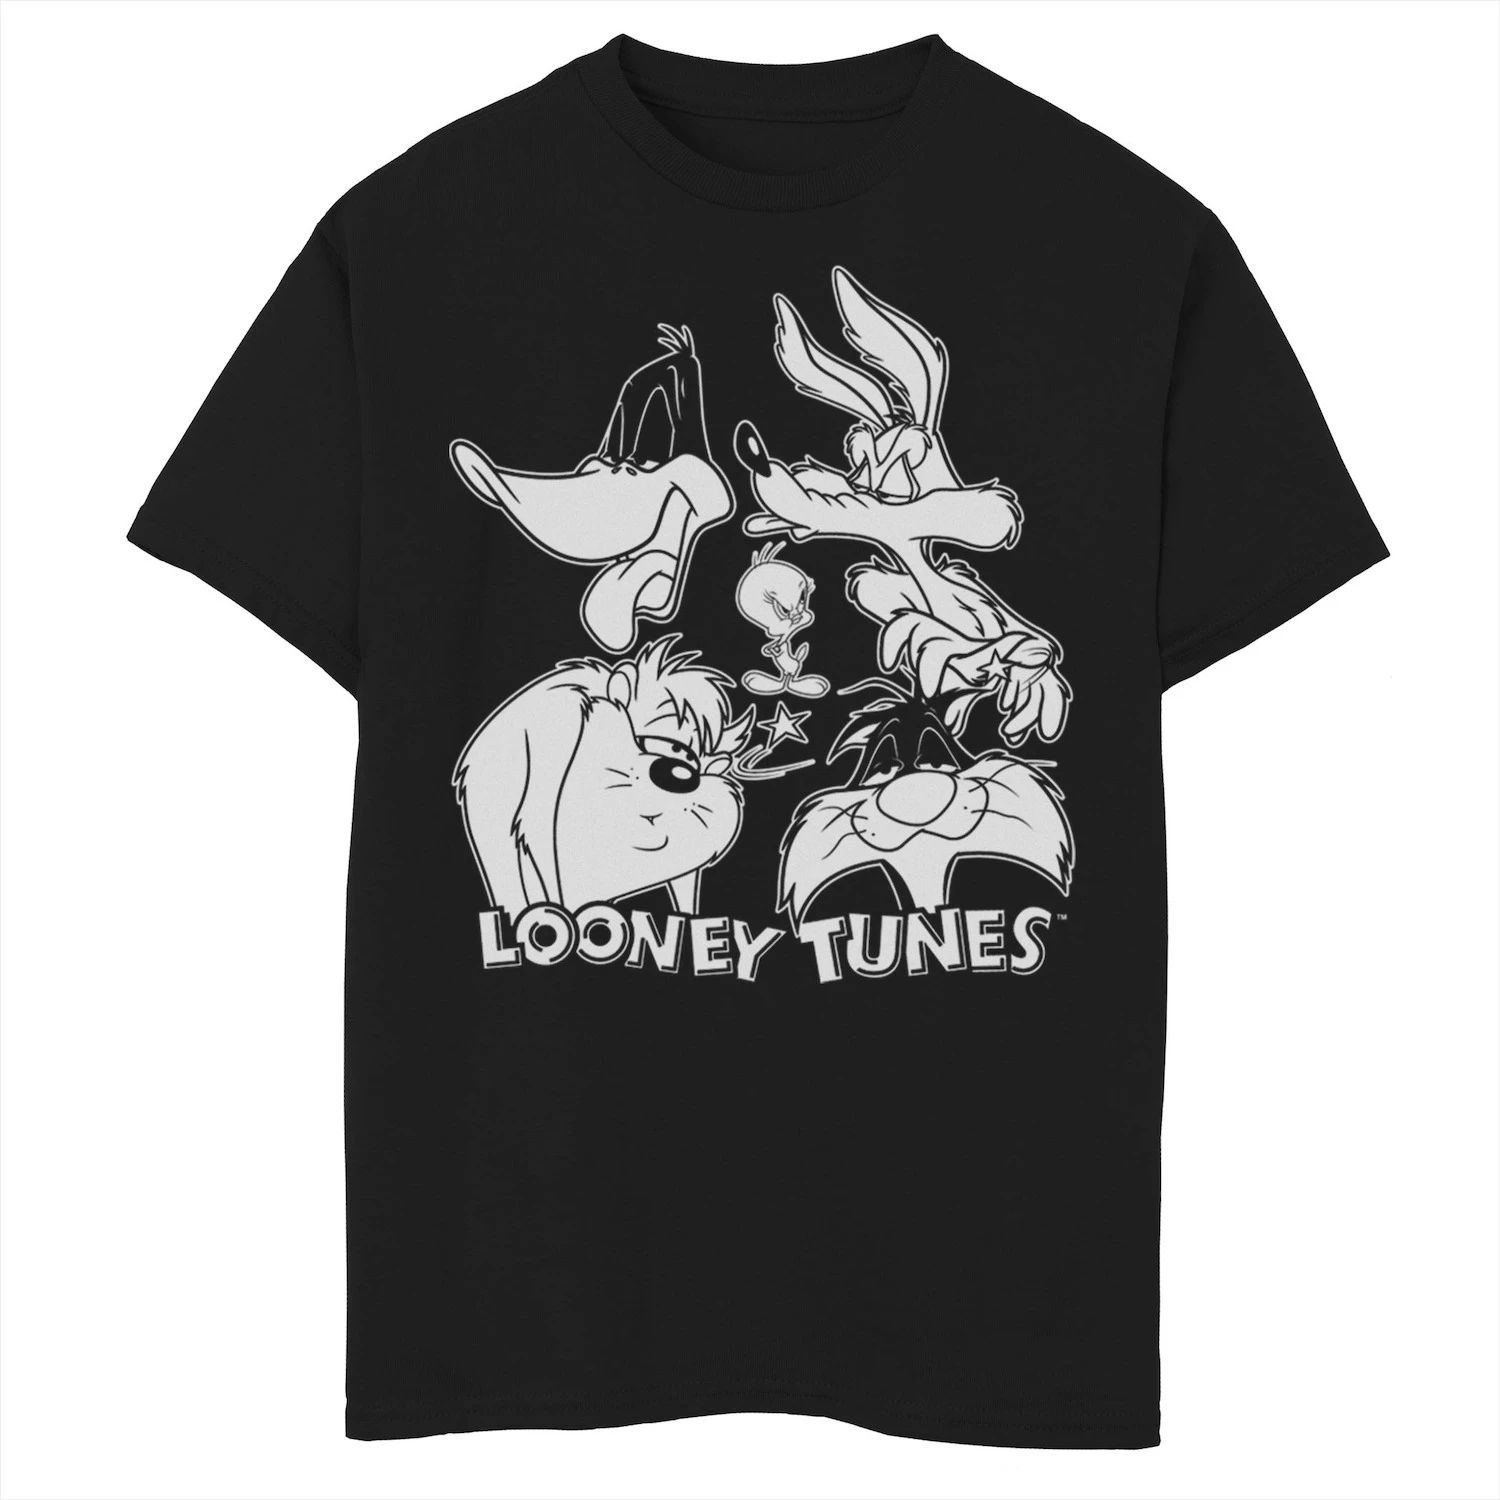 Футболка с рисунком Looney Tunes для мальчиков 8–20 лет Licensed Character футболка с рисунком looney tunes vacations для мальчиков 8–20 лет licensed character